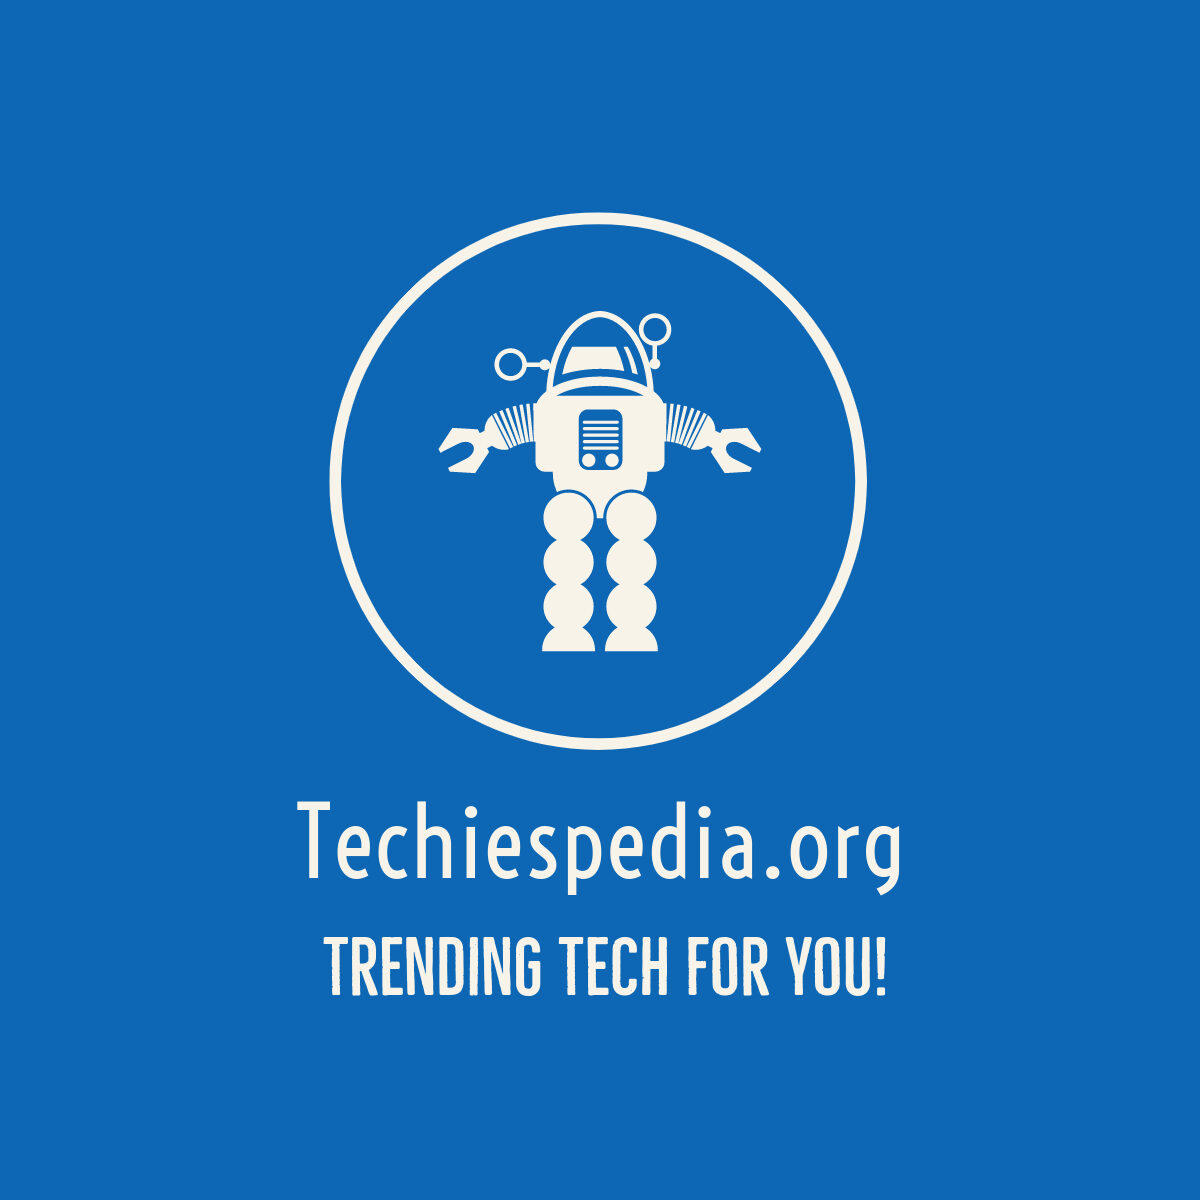 Techiespedia.org